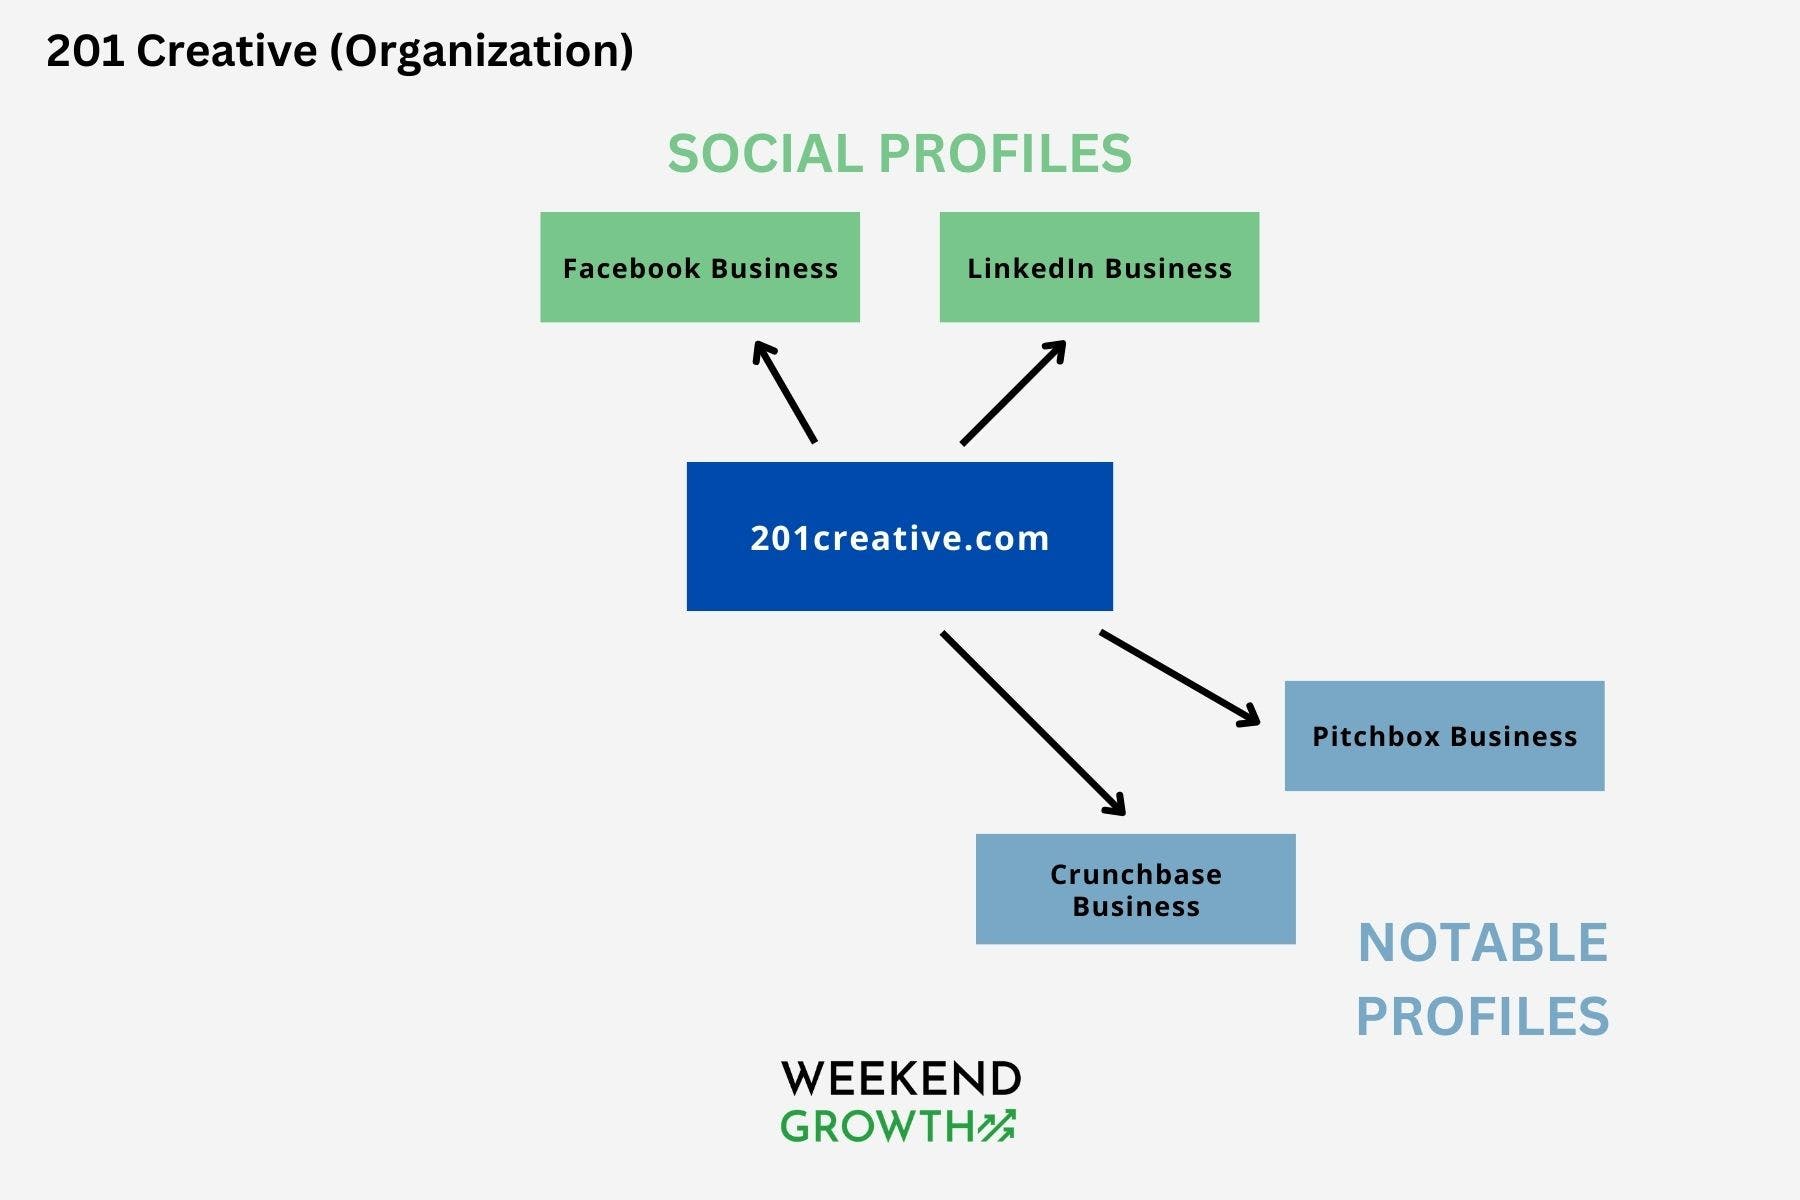 201 Creative social profiles chart organization map